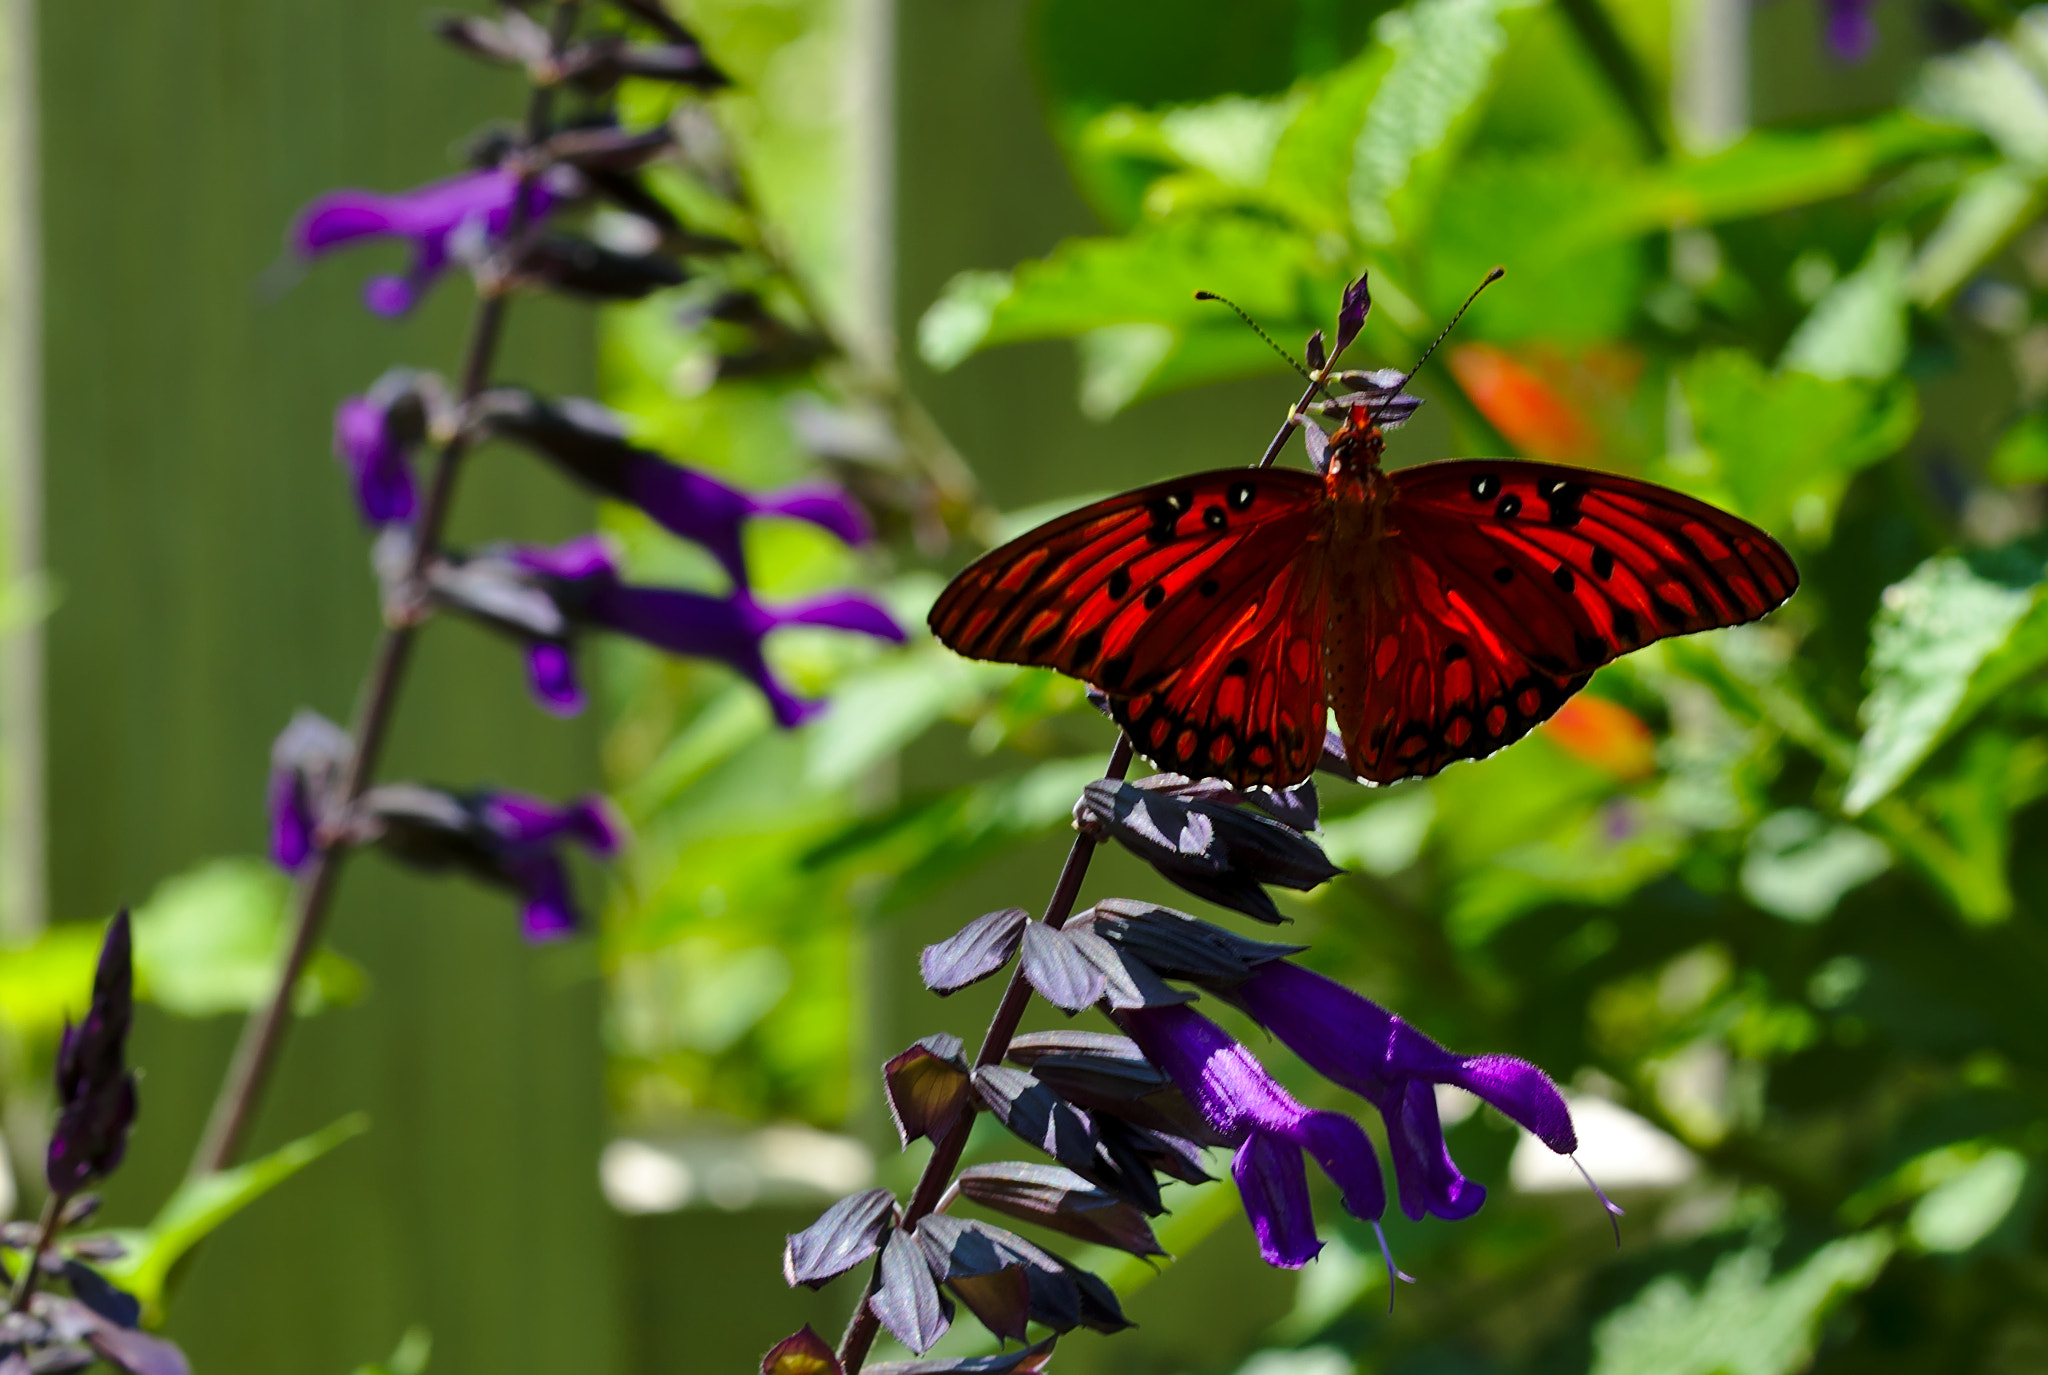 ZEISS Otus 85mm F1.4 sample photo. Butterfly on purple flower iii photography